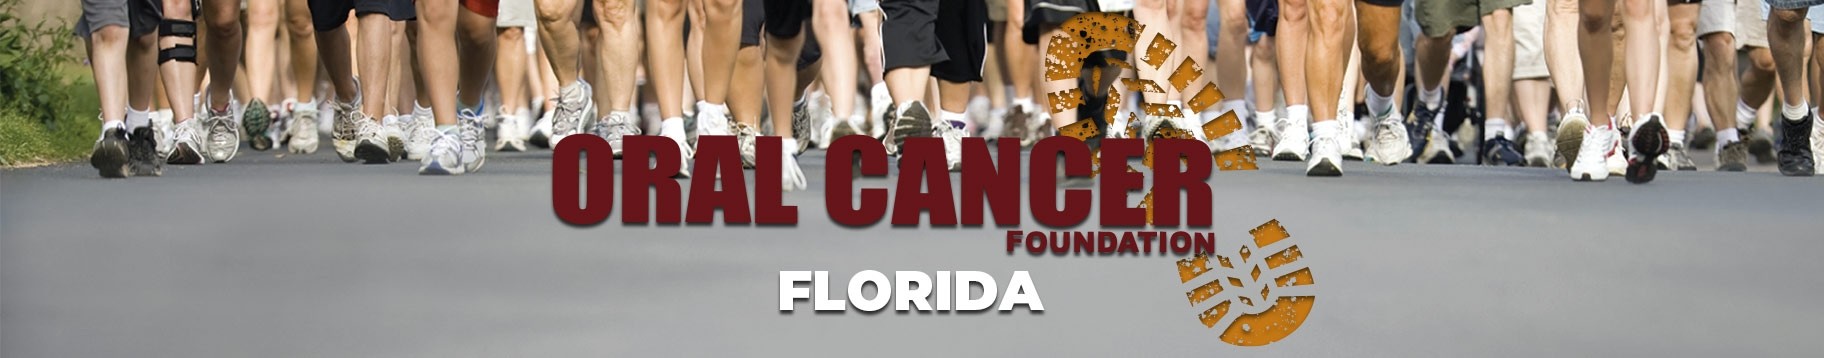 Florida Oral Cancer Foundation